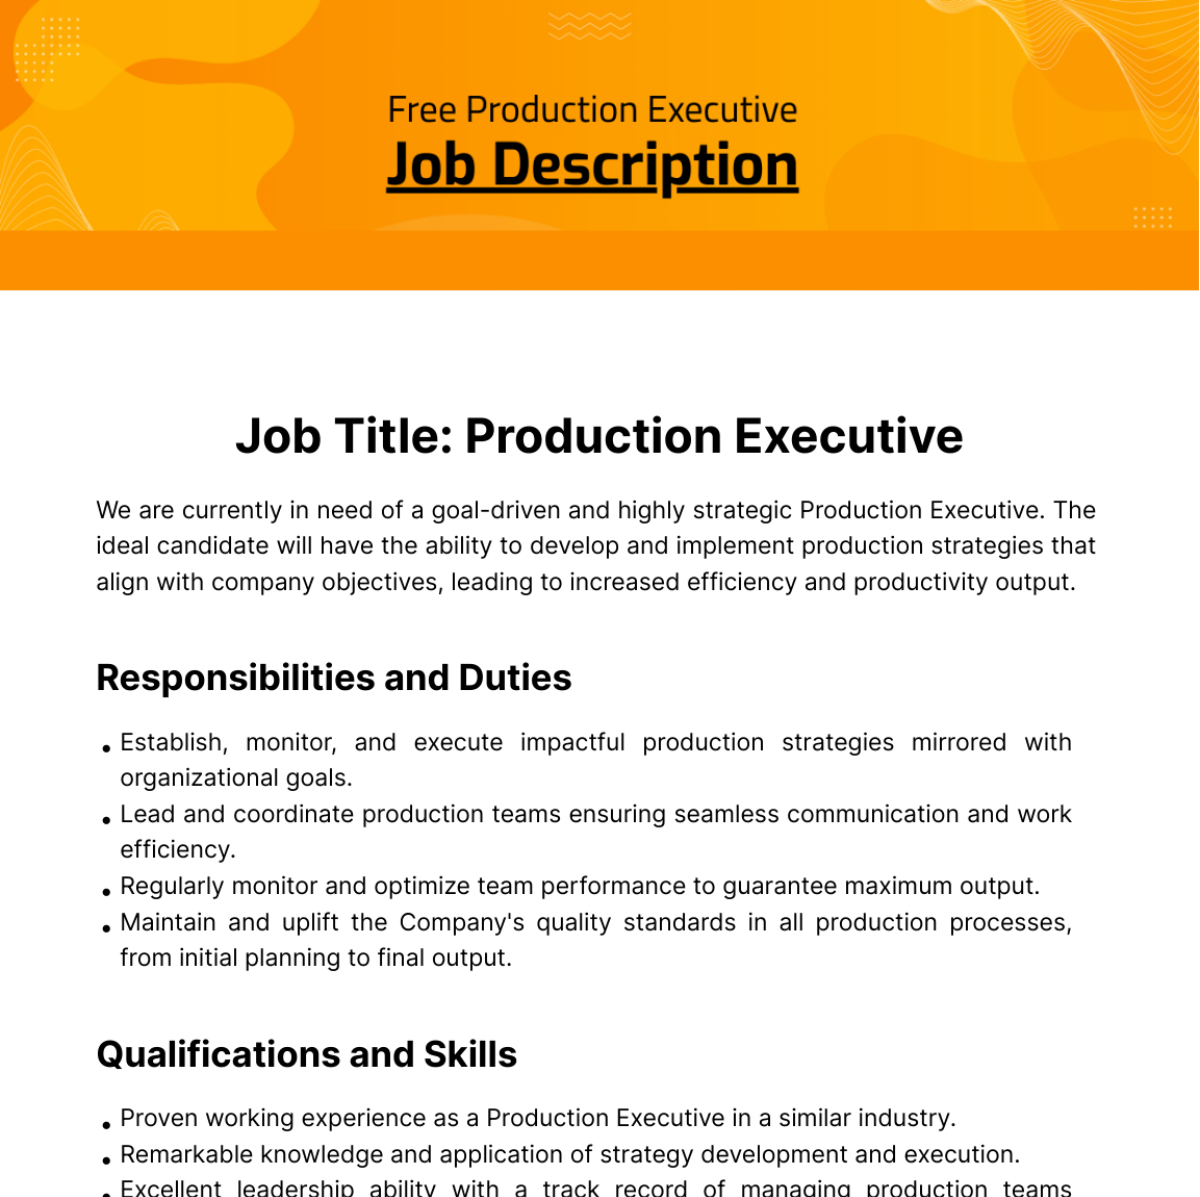 Free Production Executive Job Description Template